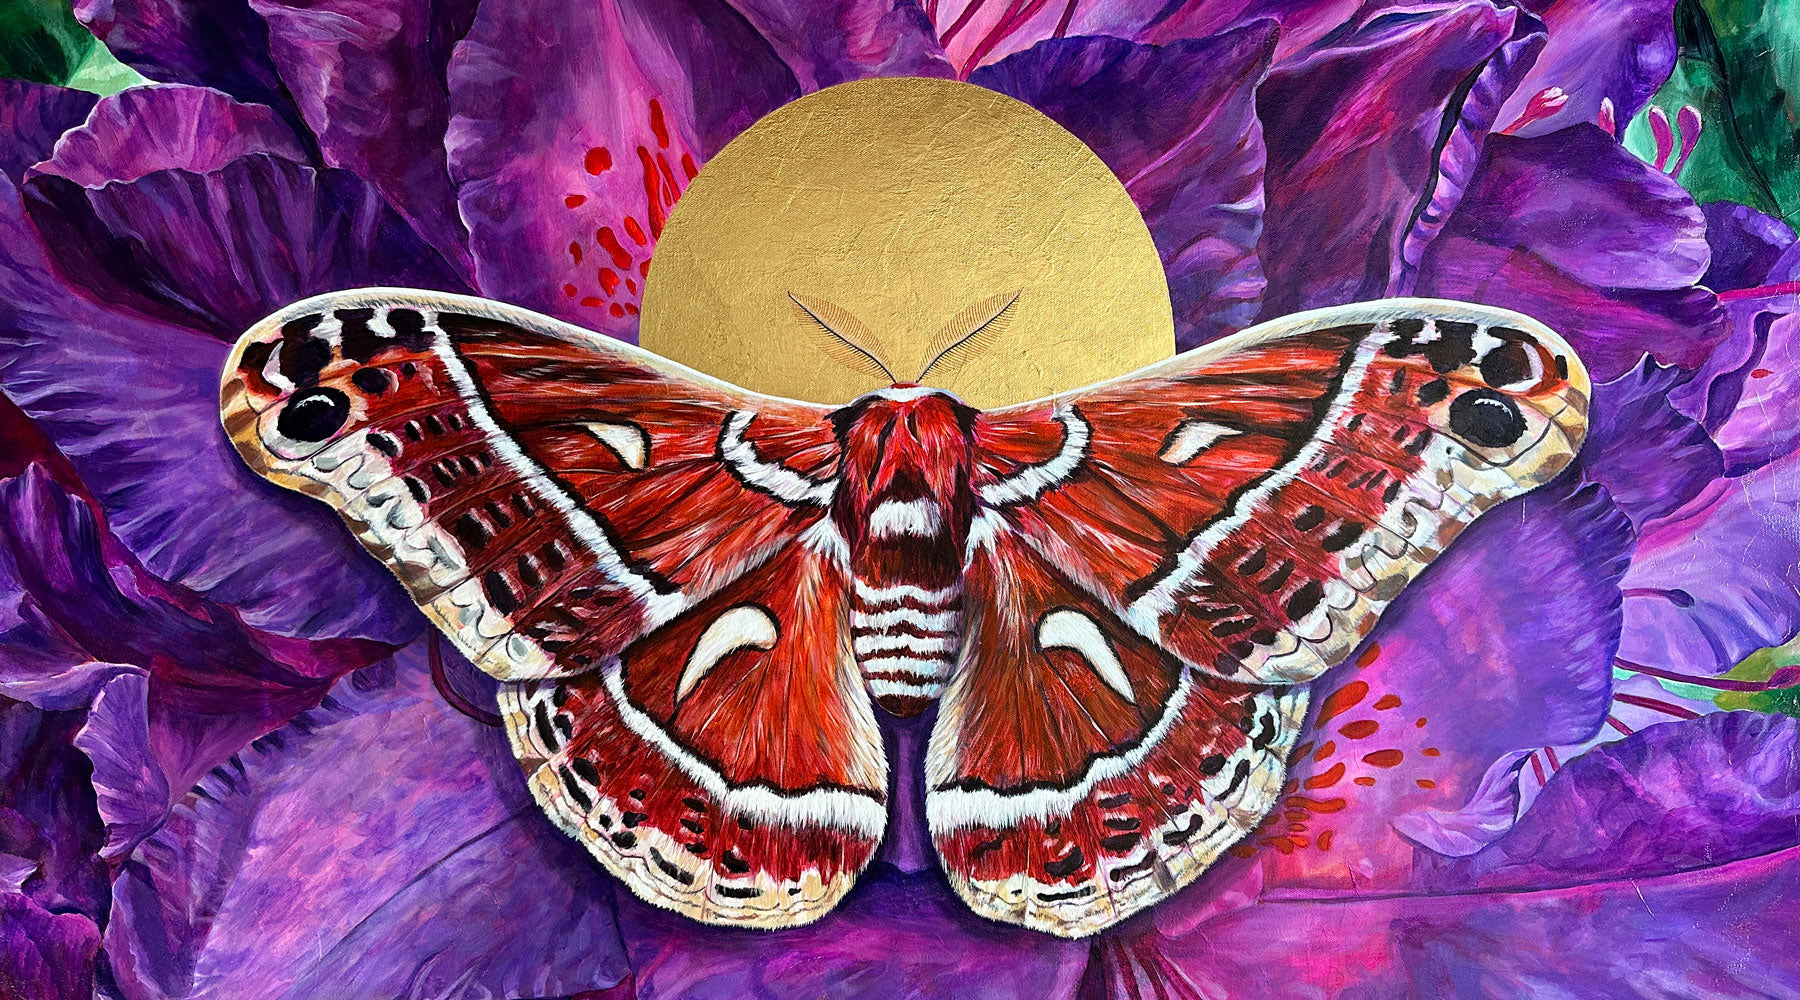 Moth painting art by Aimee Schreiber